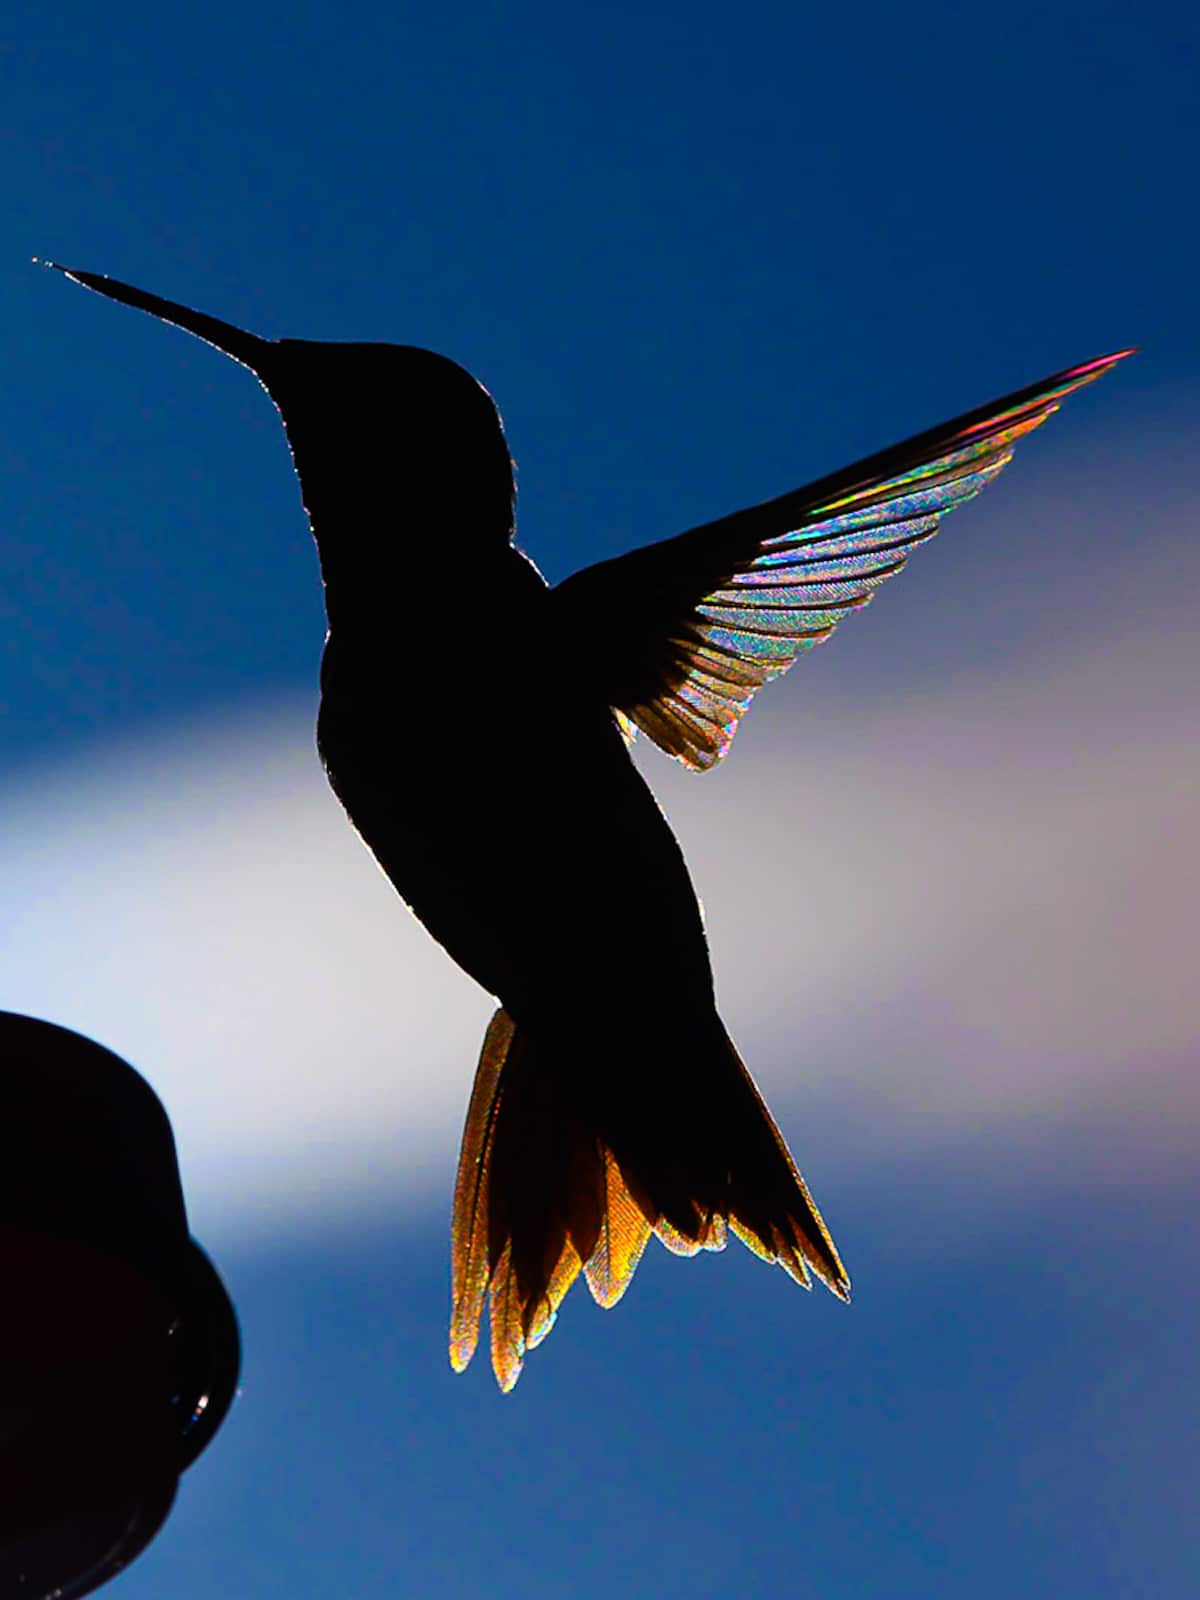 Hummingbird Photographs by Stan Maupin